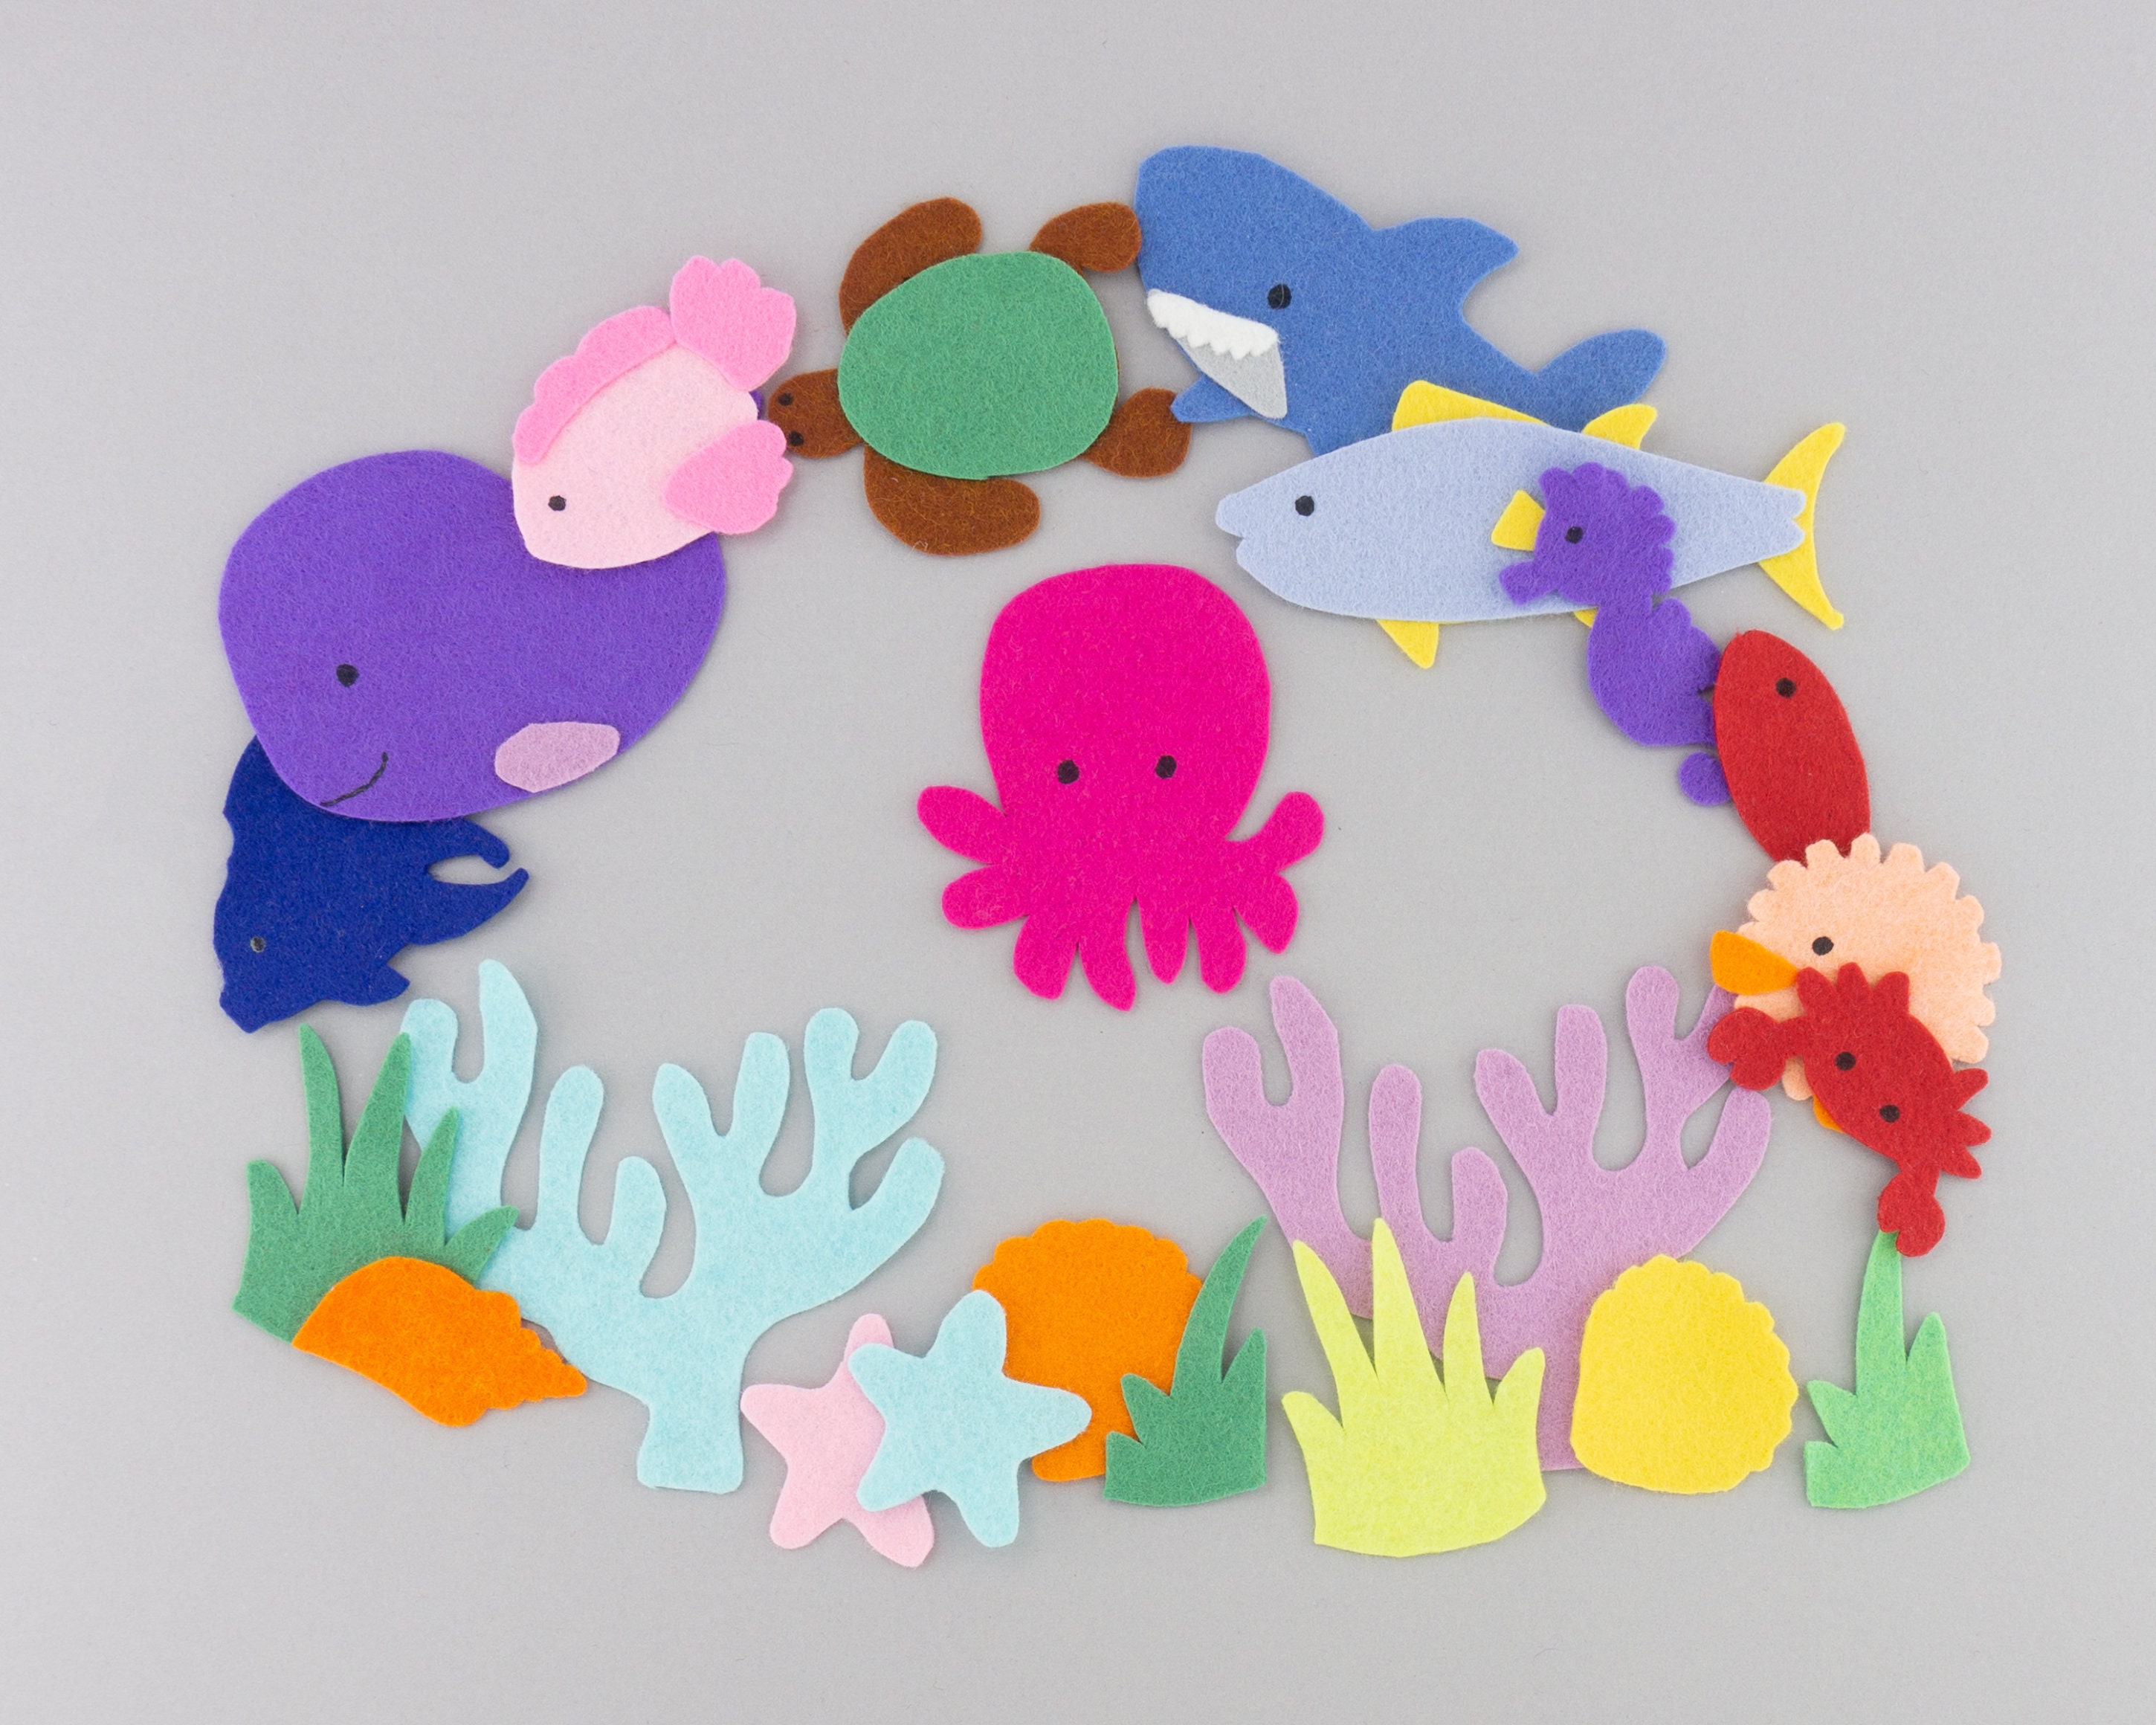 Ocean and Fish Felt Board Story Set for Preschool and Kindergarten